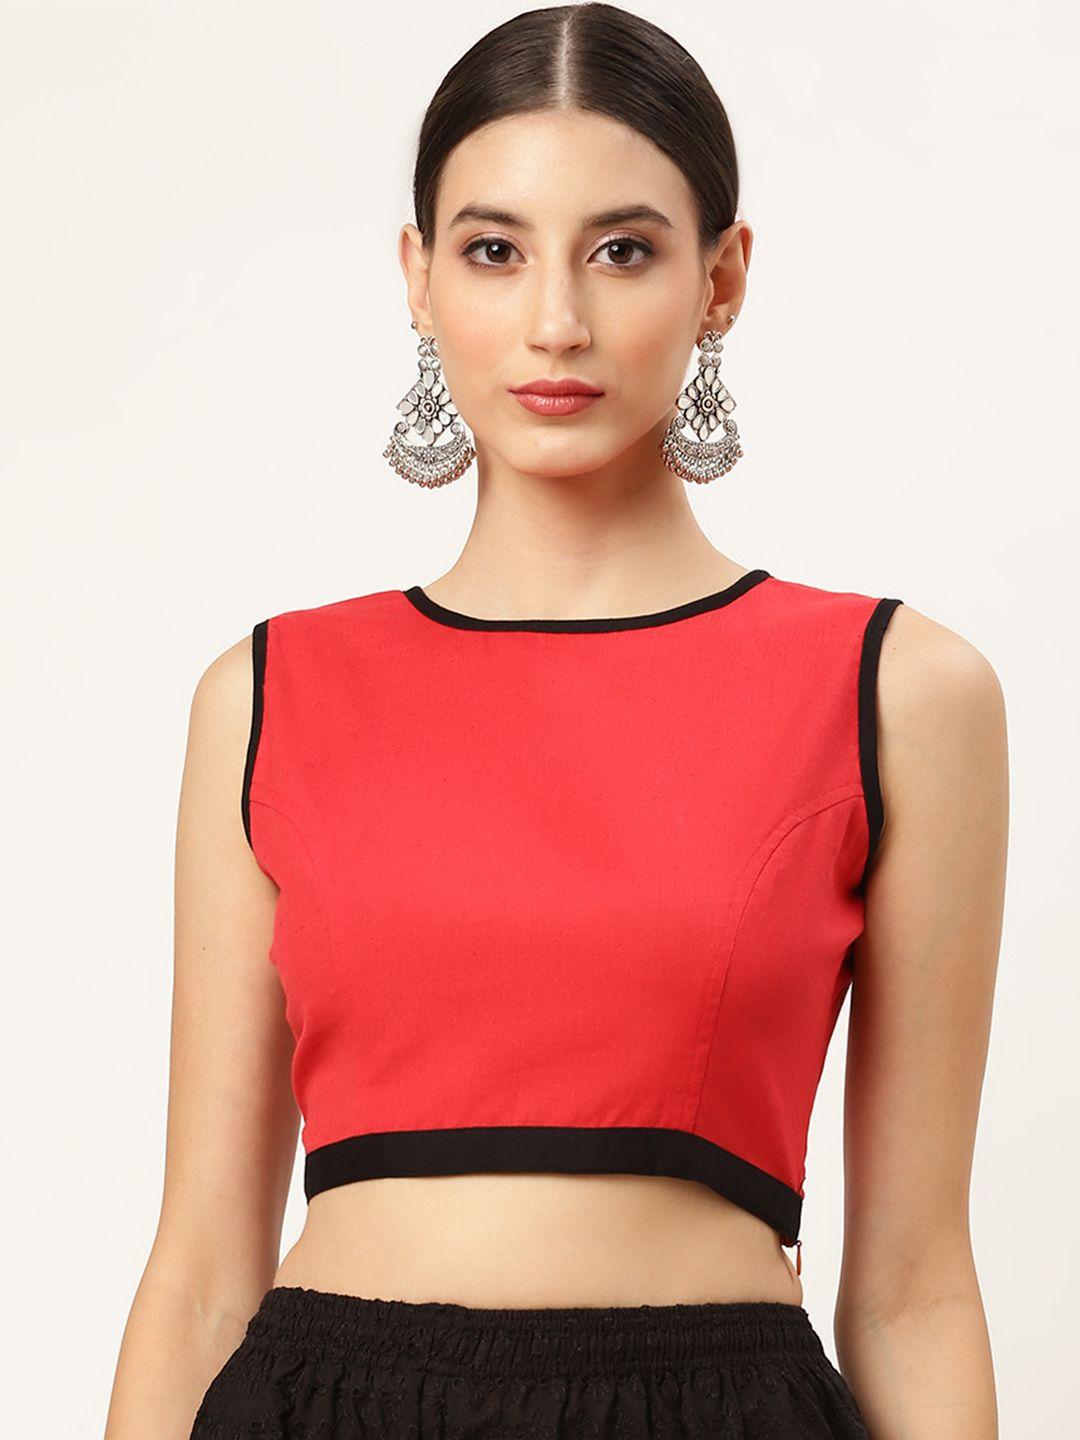 molcha women red & black cotton saree blouse